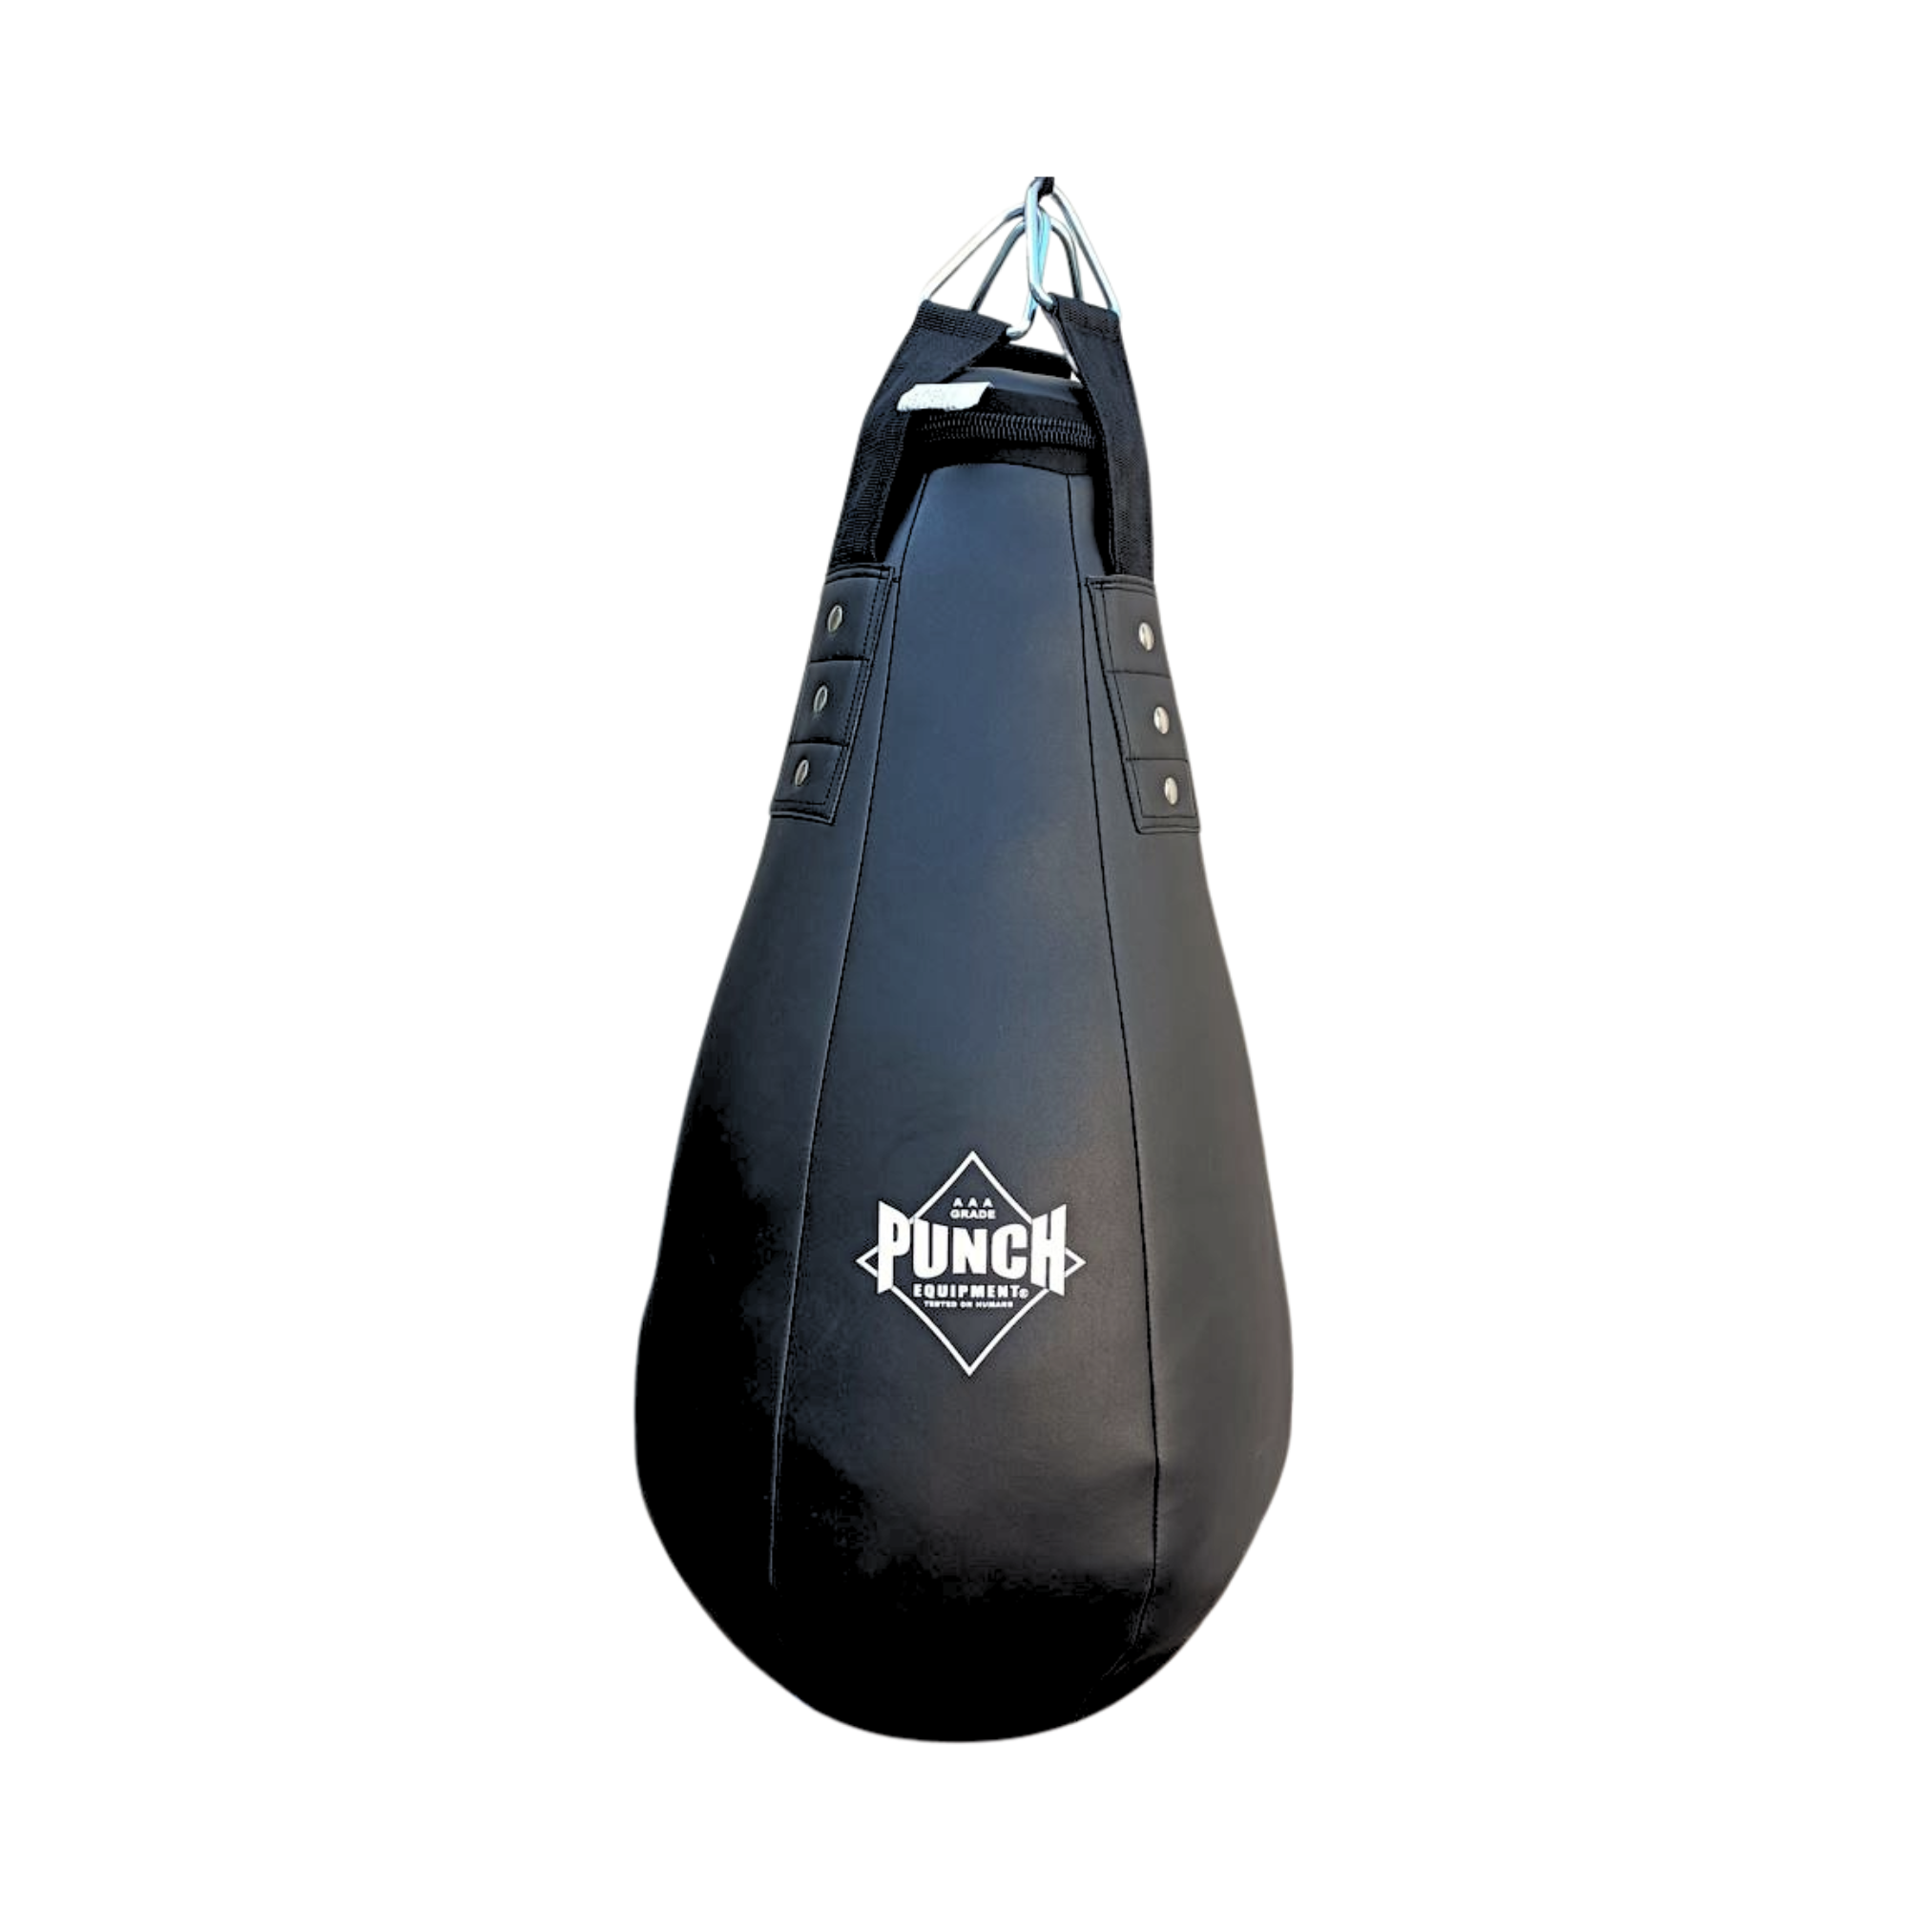 BOXING BAG - Black Diamond™ - TEAR DROP - MAIZE - 2.5FT